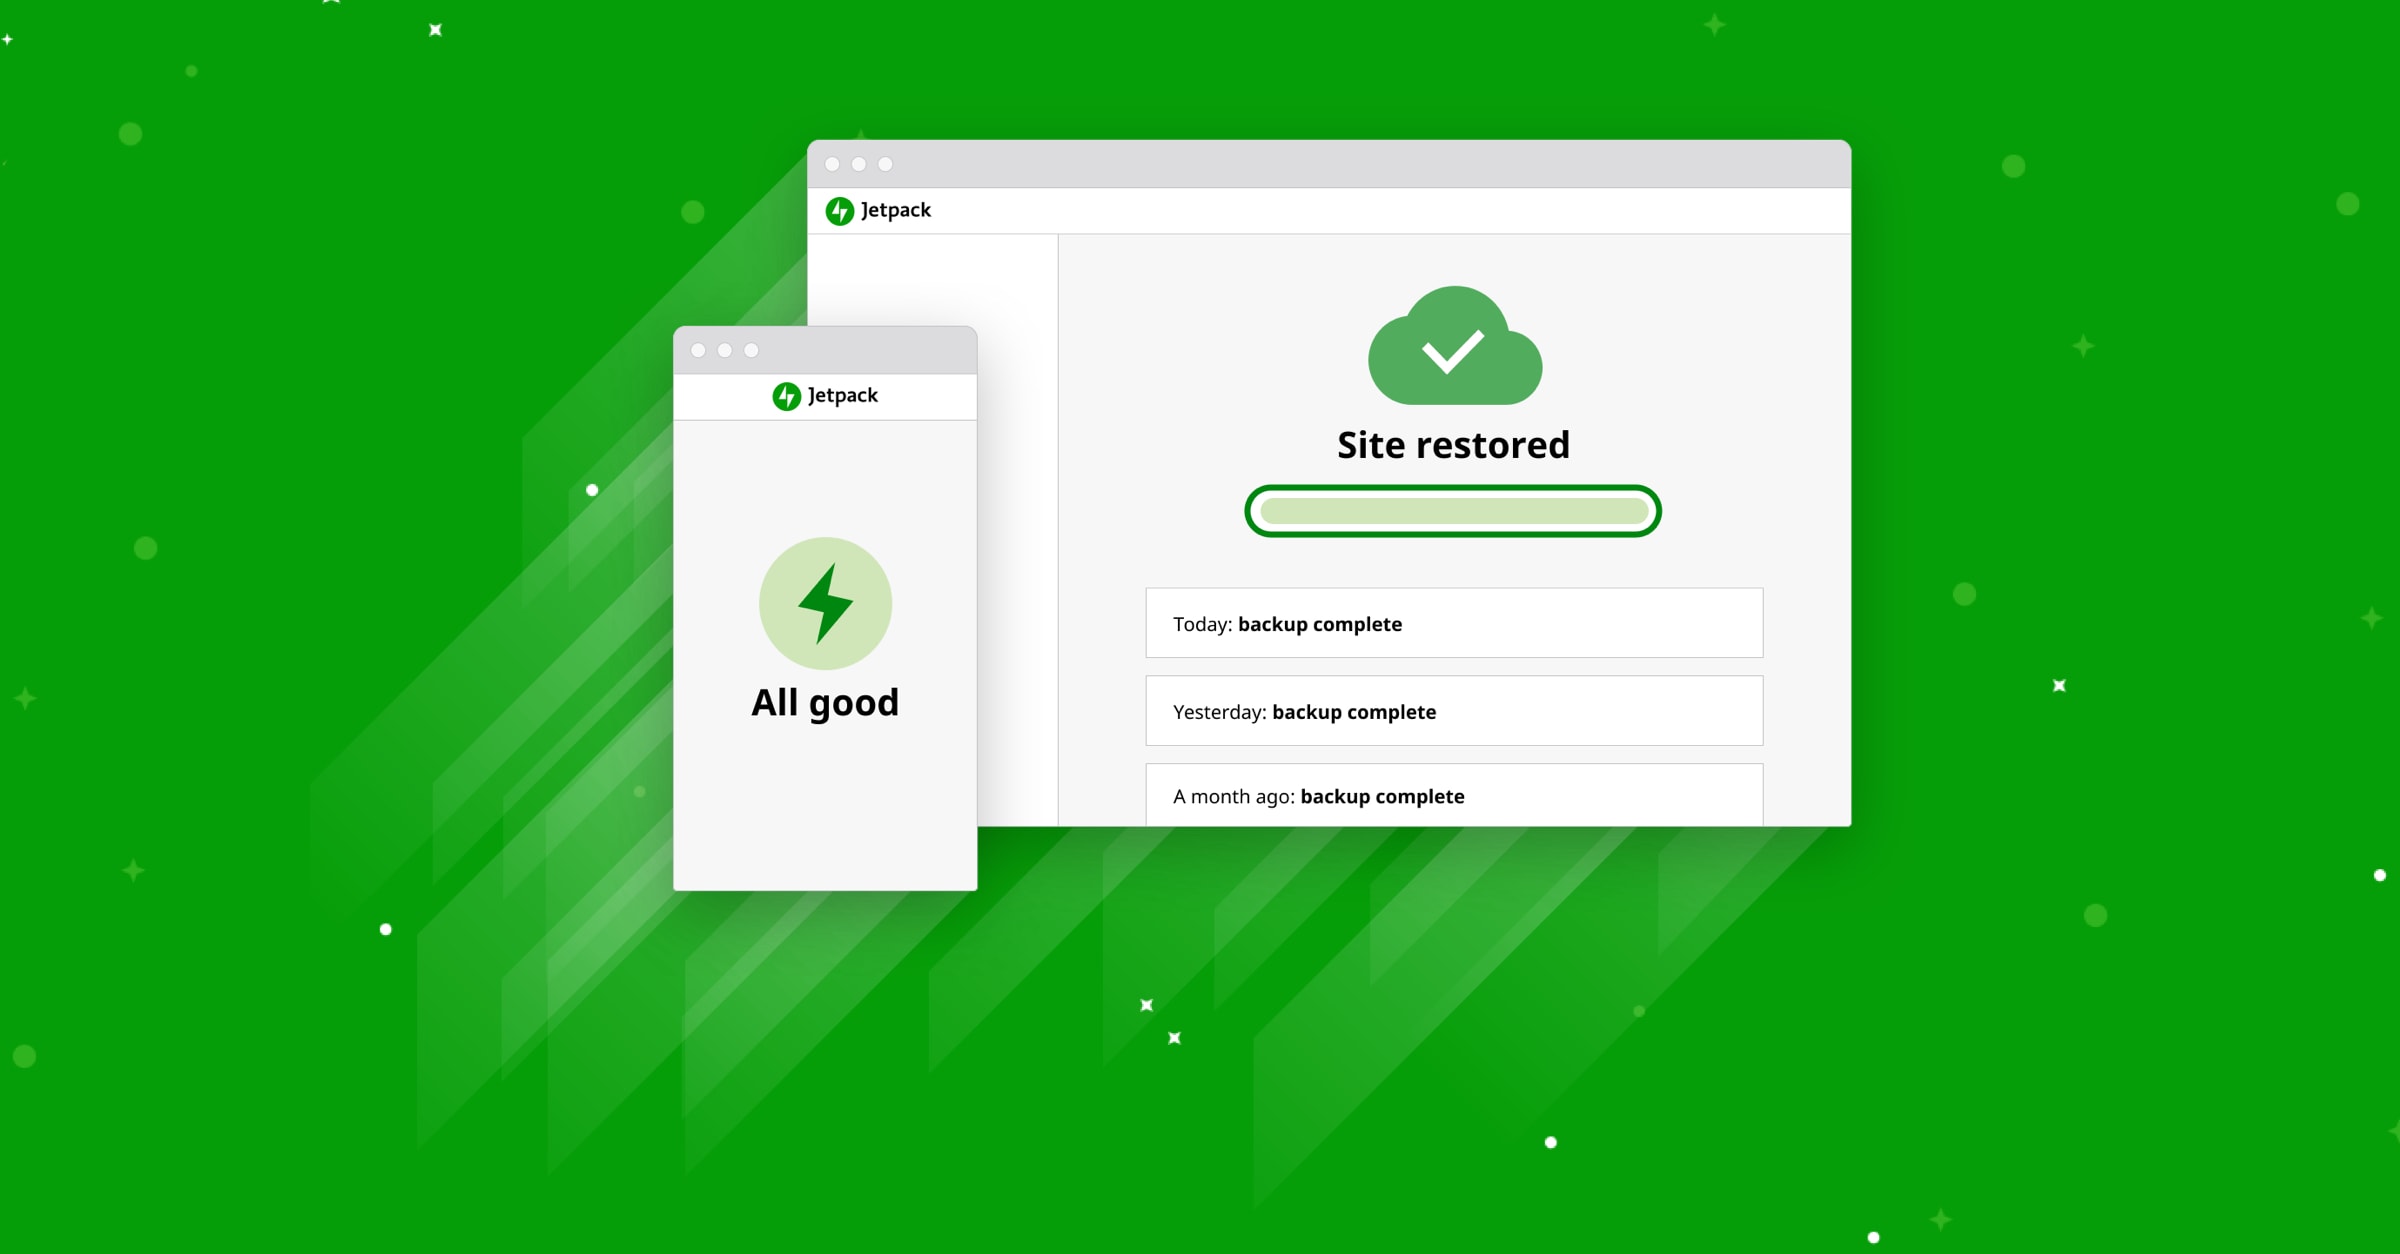 Jetpack Backup screenshots on a green background